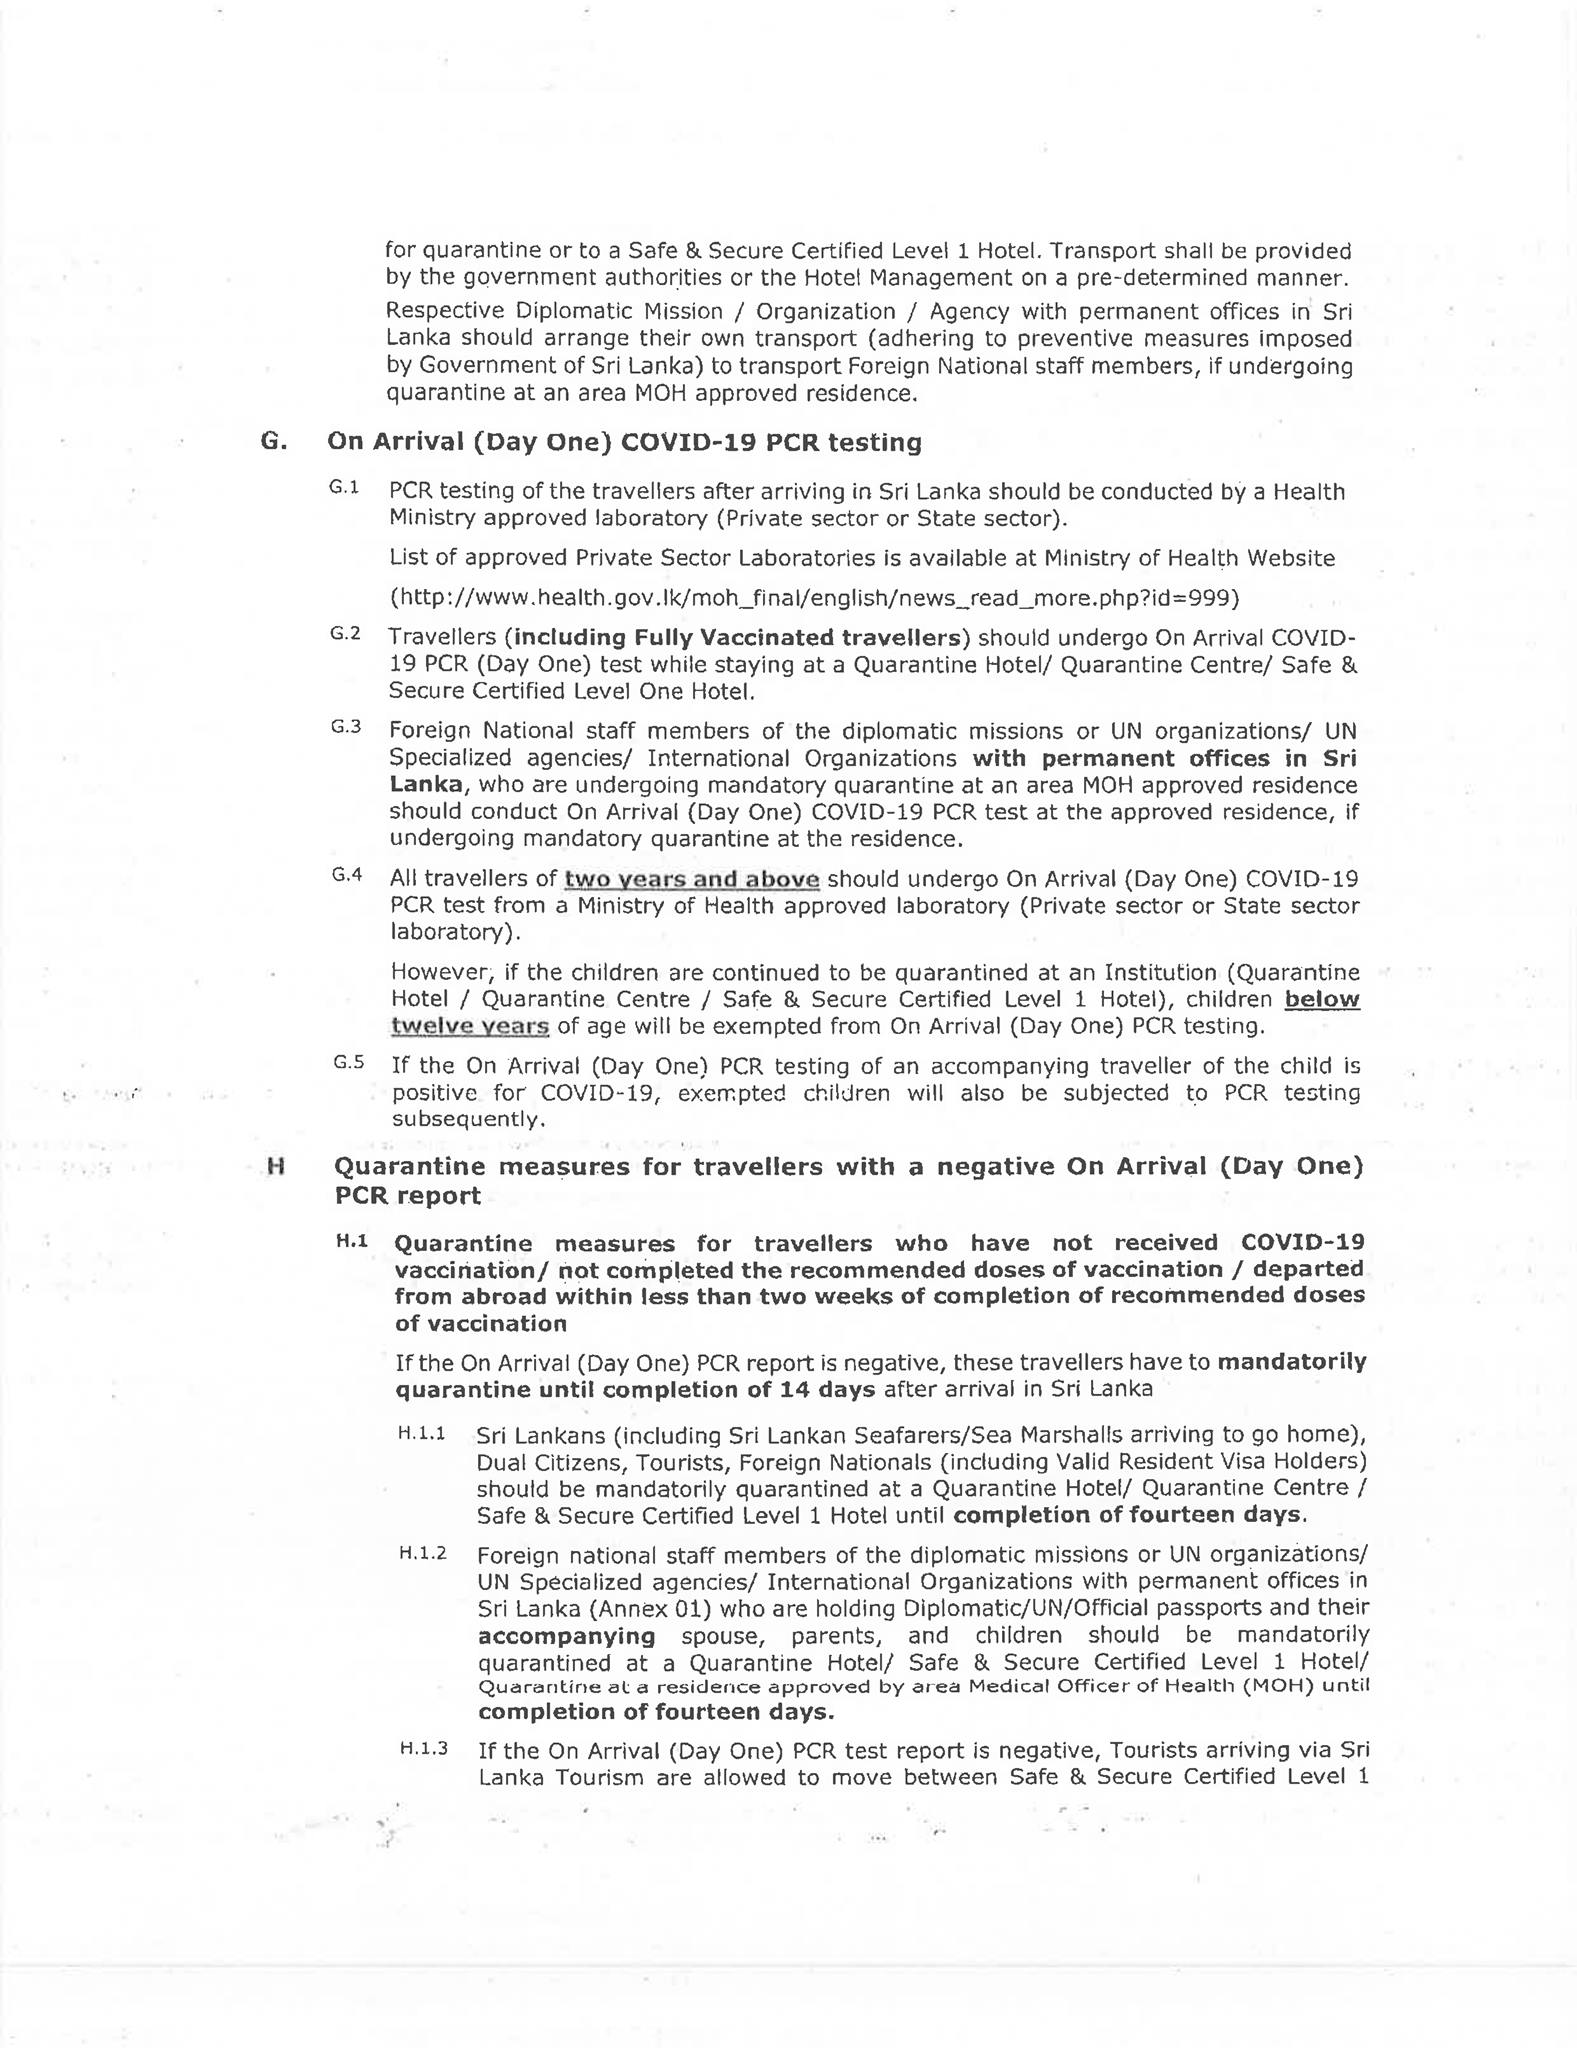 Amendments to the Quarantine Measures